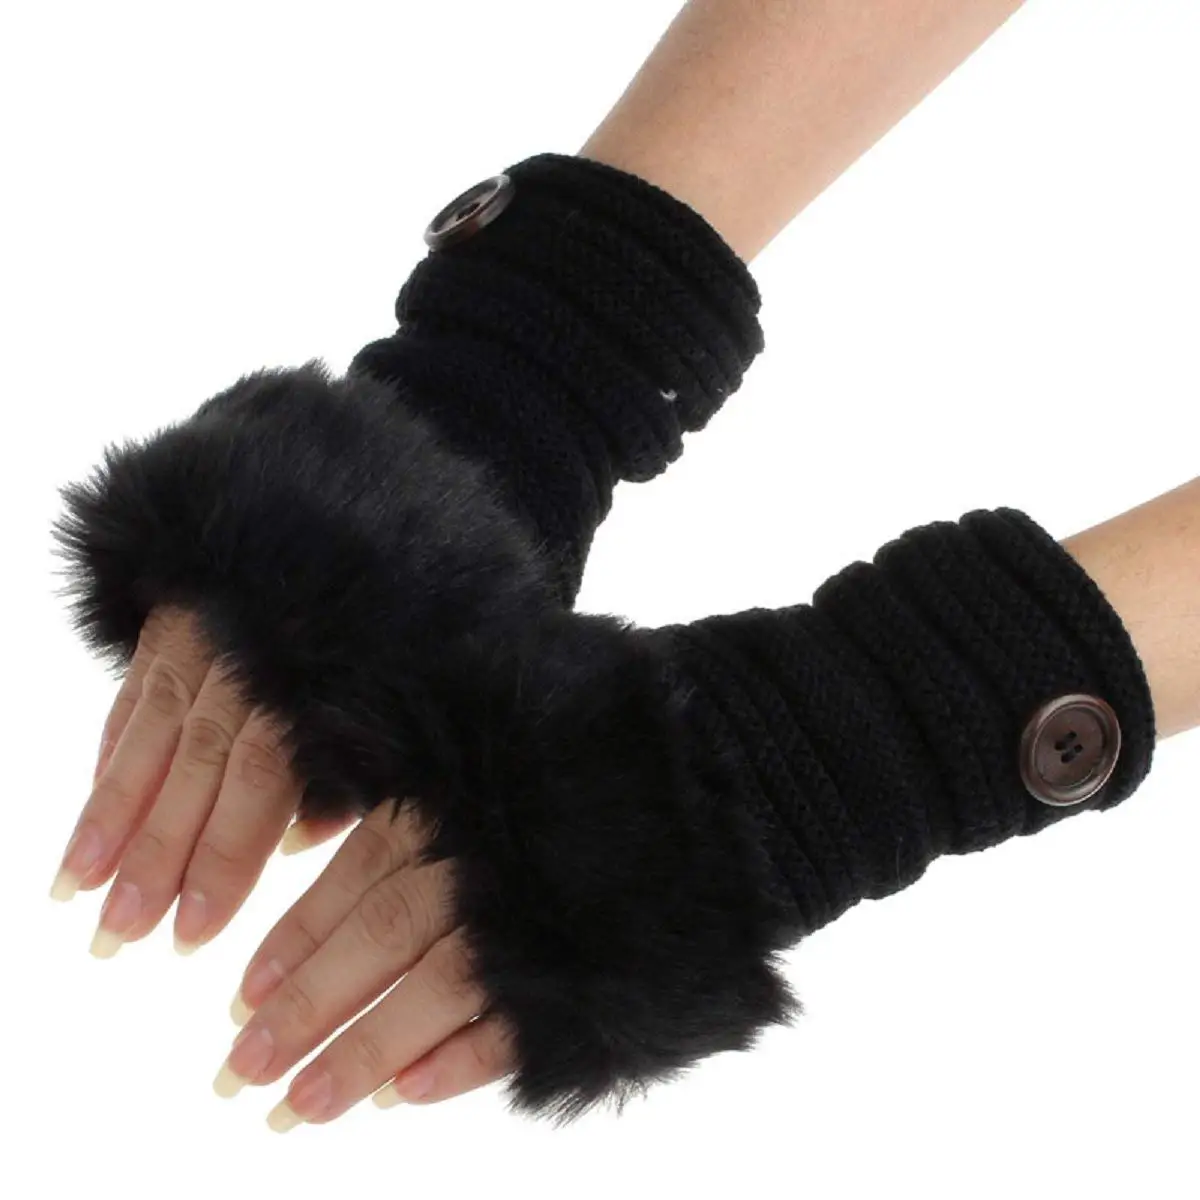 C.C Women/'s Faux Wrist Fur Fingerless Sherpa Lined Convertible CC Mittens Gloves